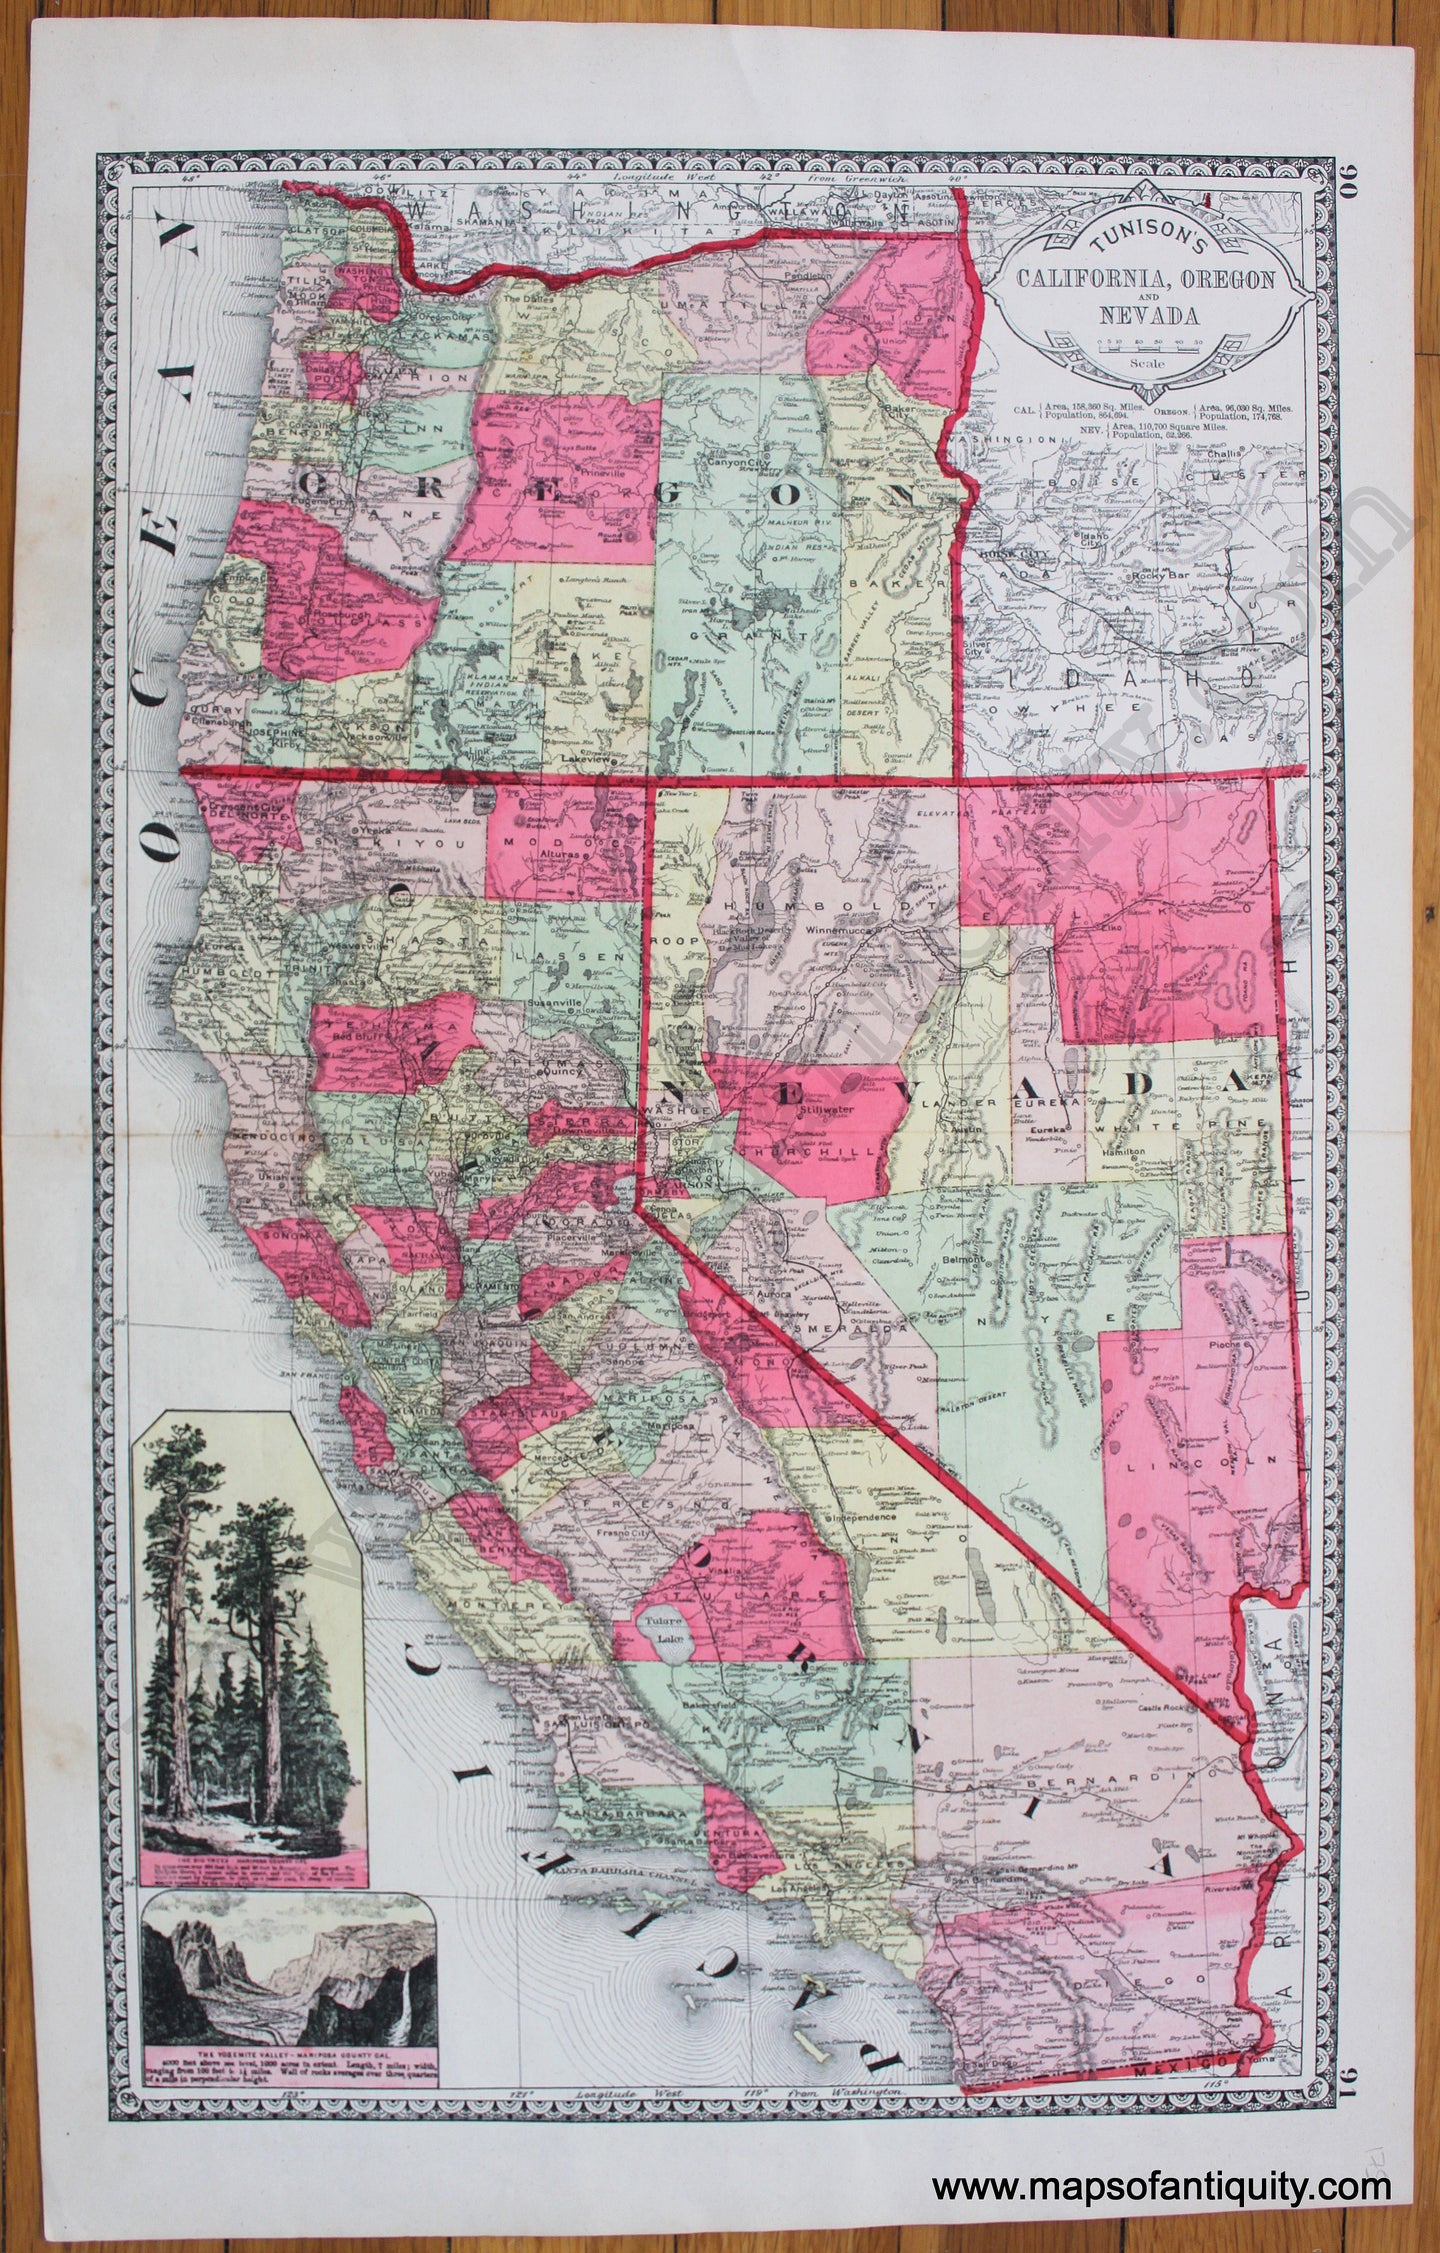 Antique-Printed-Color-Map-Tunison's-California-Oregon-and-Nevada;-verso:-Colorado-Arizona-c.-1885-Tunison-West-California-1800s-19th-century-Maps-of-Antiquity